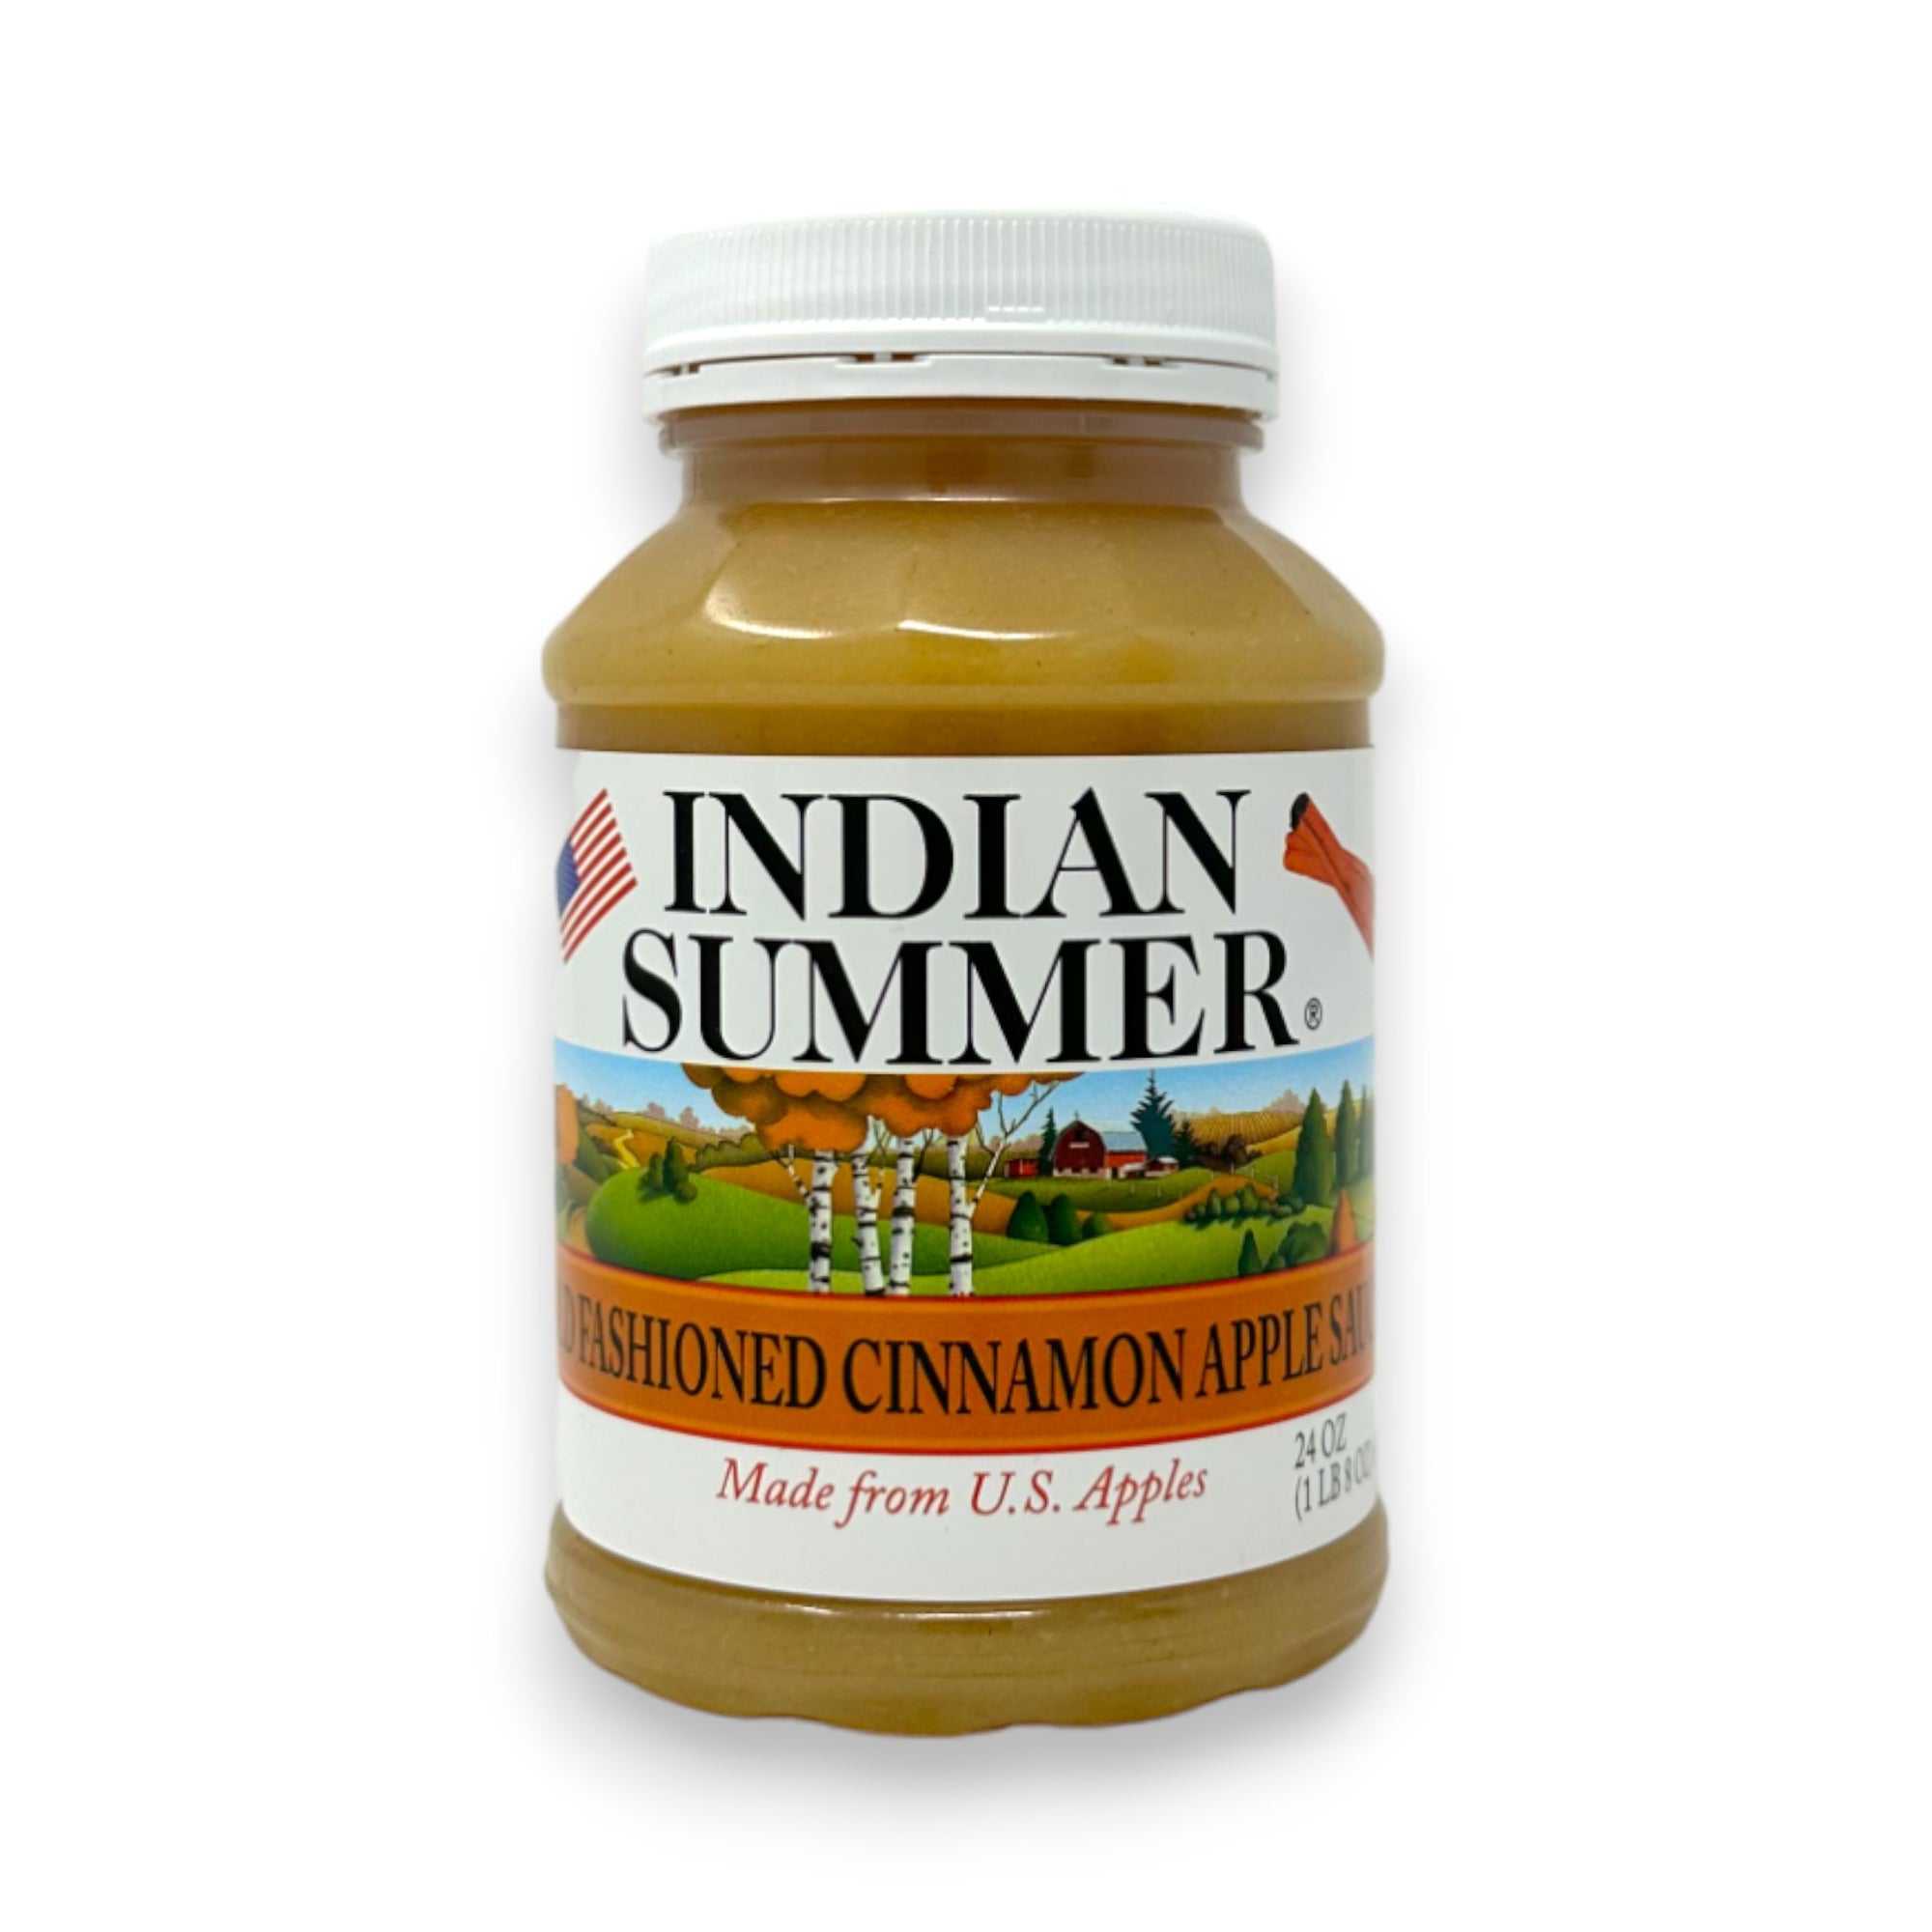 Indian Summer Old Fashioned Cinnamon Applesauce